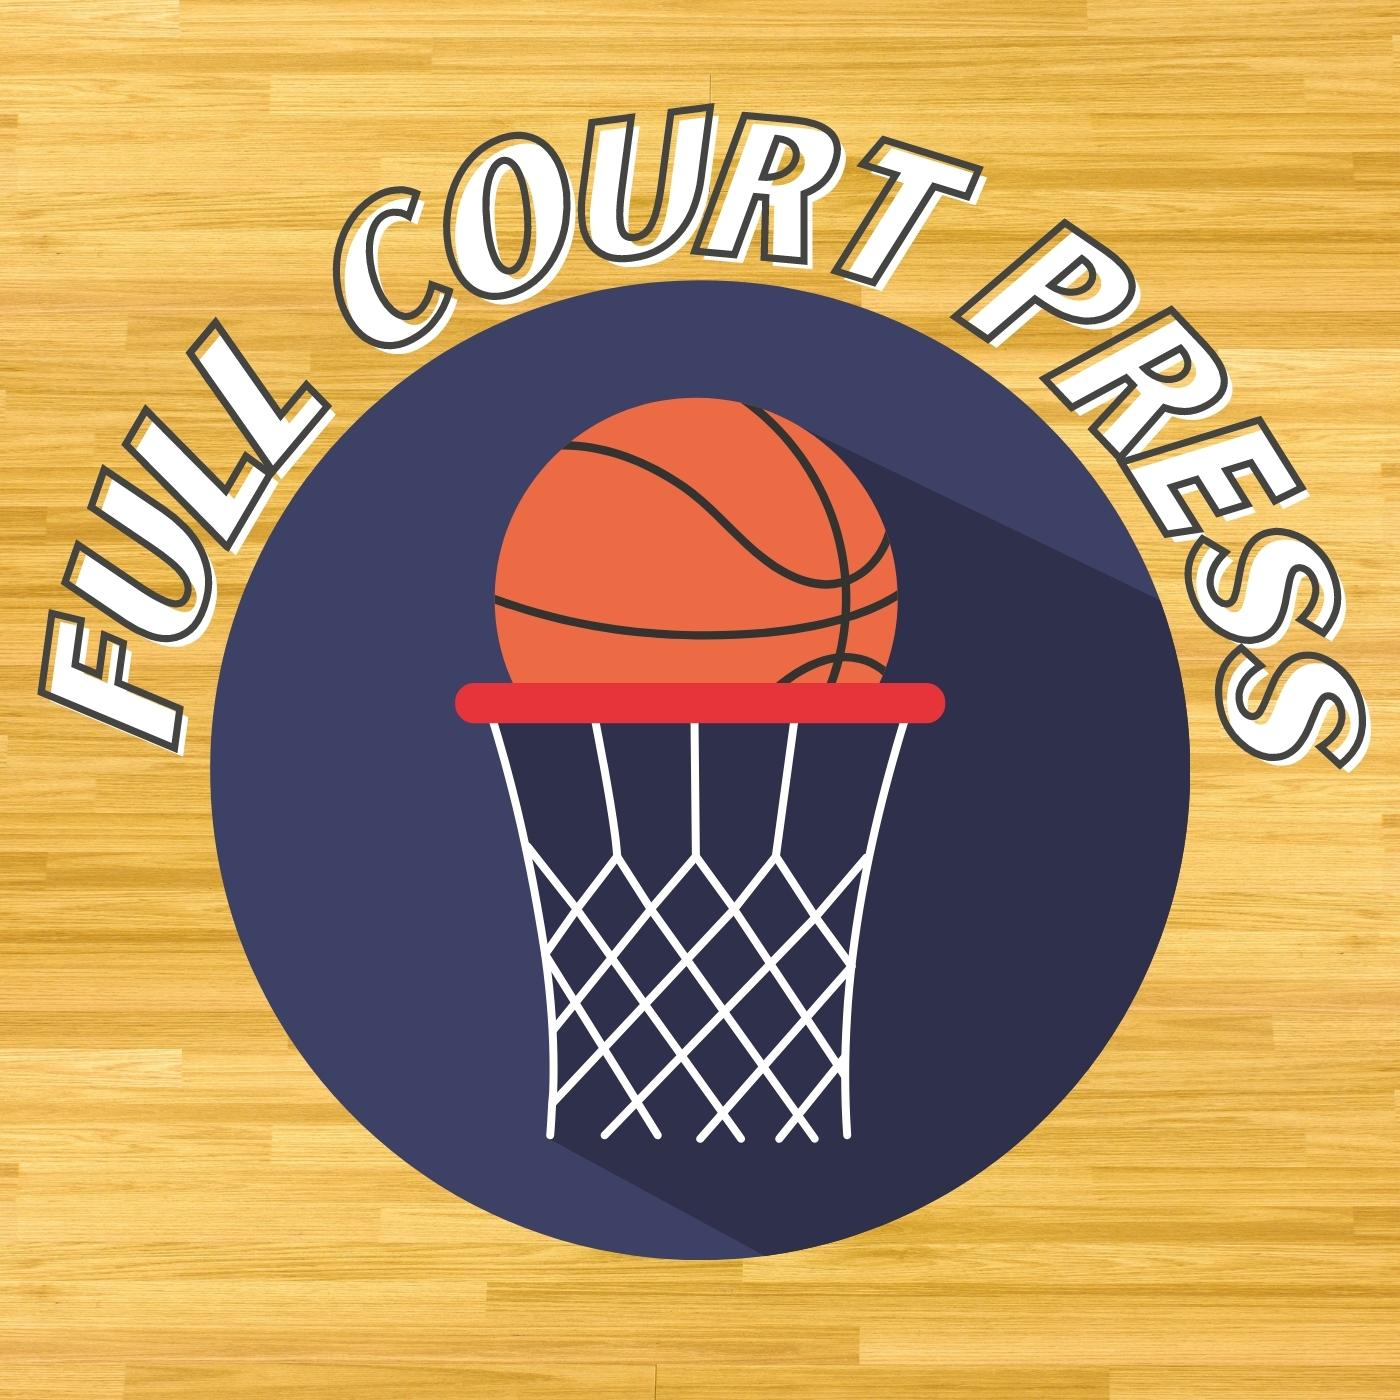 Full Court Press S02.E14 - Trade deadline recap + All-Star weekend preview